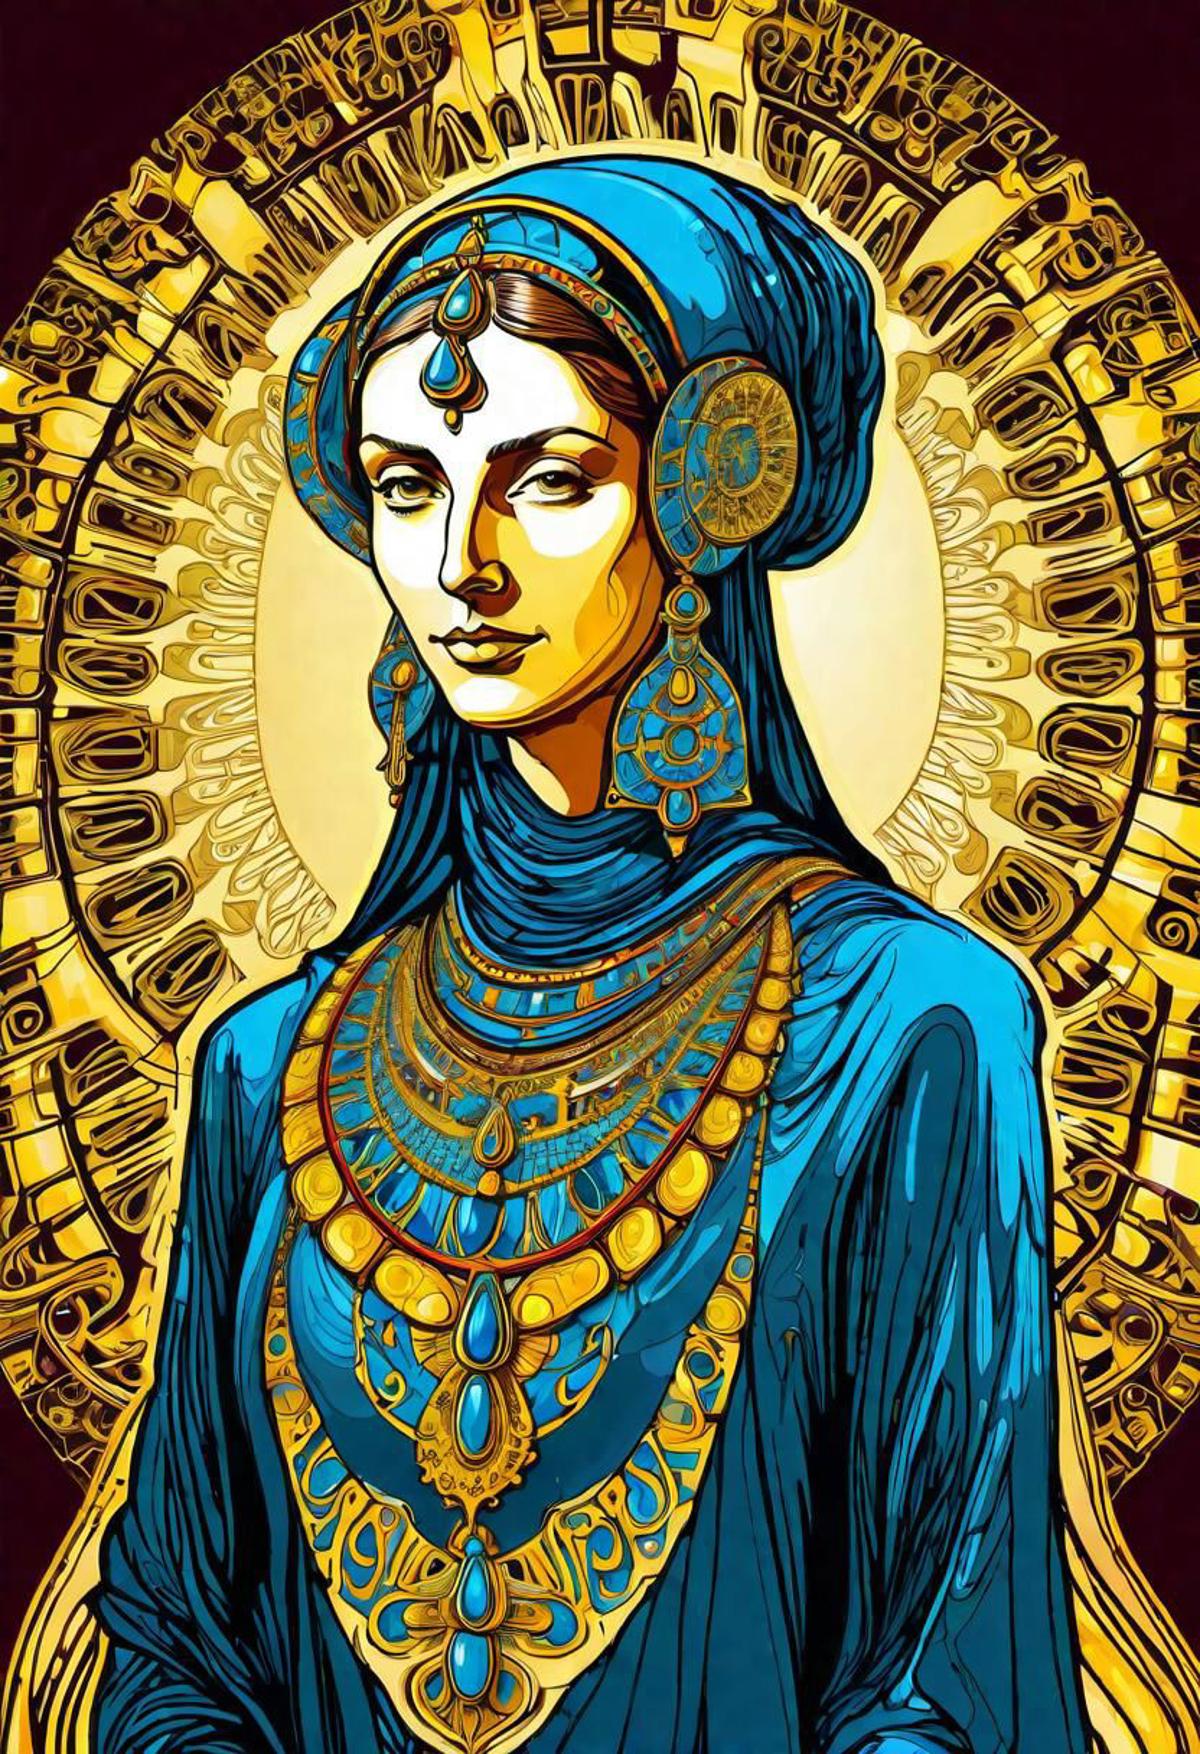 Lady of Elche image by cristianchirita749